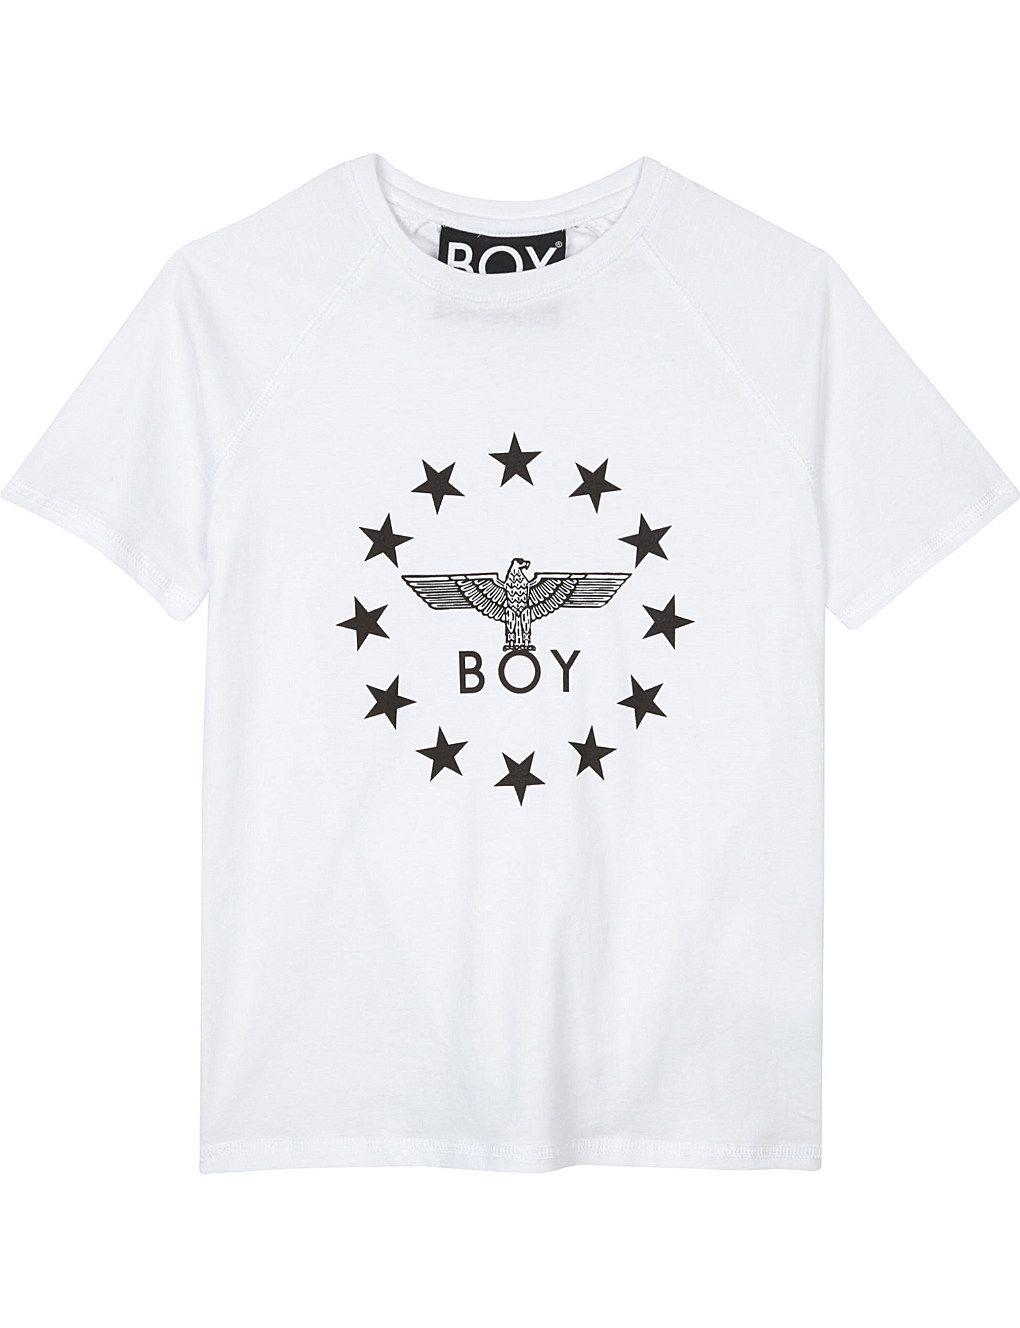 Boy Looking at Star Logo - BOY LONDON - Globe star logo cotton T-shirt 3-12 years | Selfridges.com